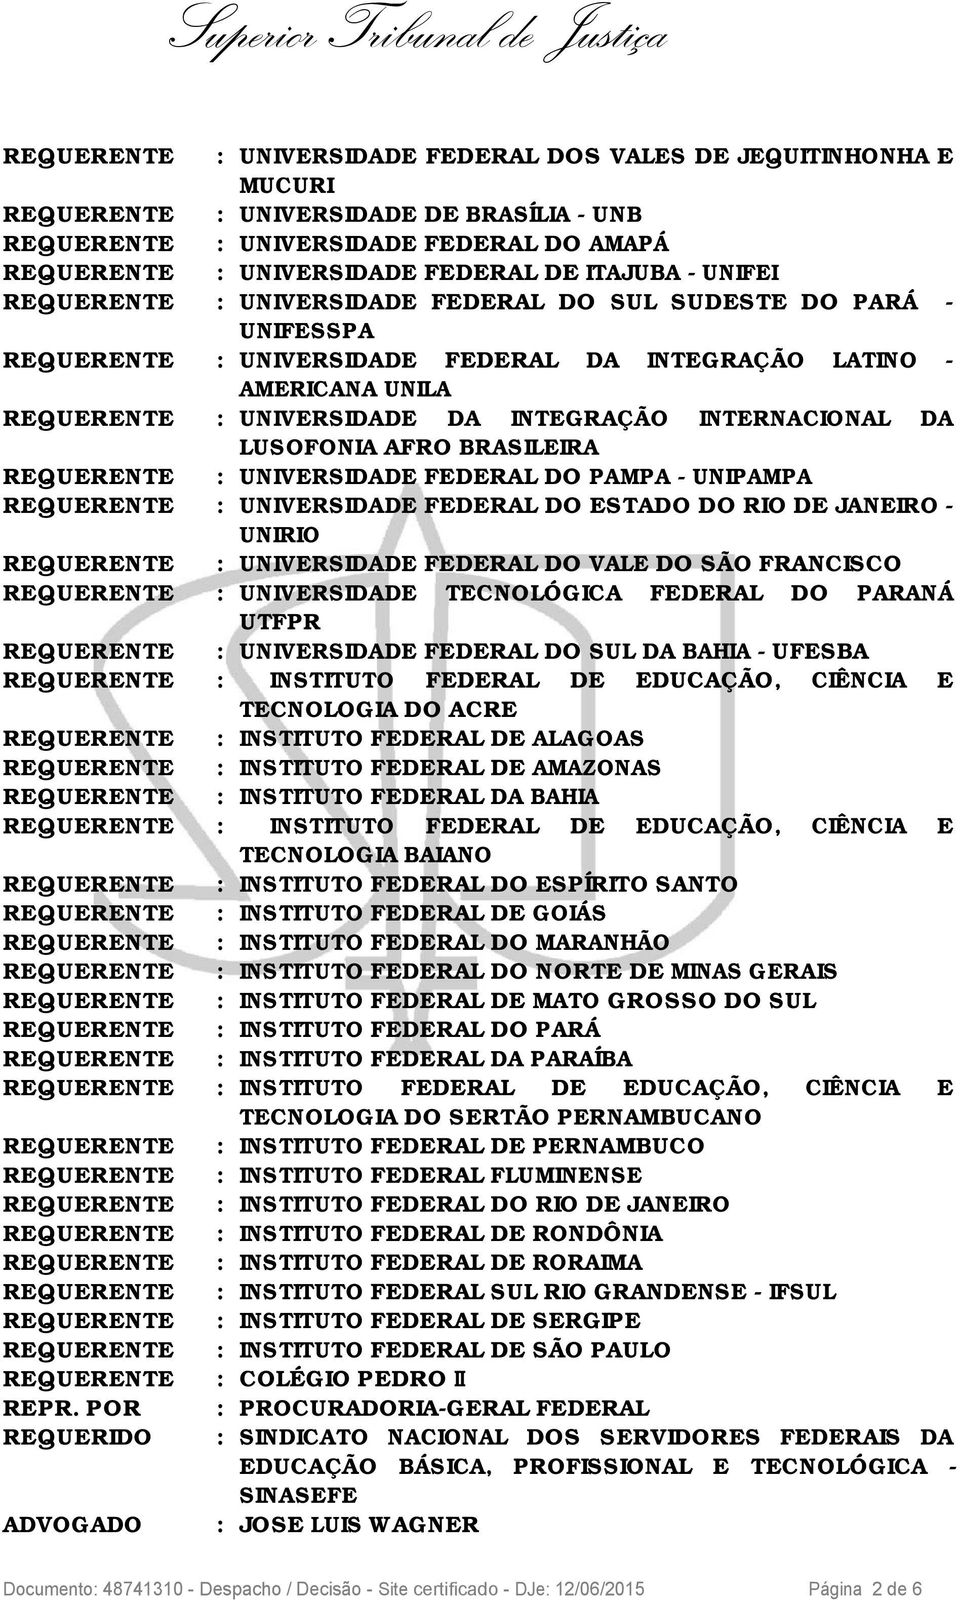 INTERNACIONAL DA LUSOFONIA AFRO BRASILEIRA REQUERENTE : UNIVERSIDADE FEDERAL DO PAMPA - UNIPAMPA REQUERENTE : UNIVERSIDADE FEDERAL DO ESTADO DO RIO DE JANEIRO - UNIRIO REQUERENTE : UNIVERSIDADE